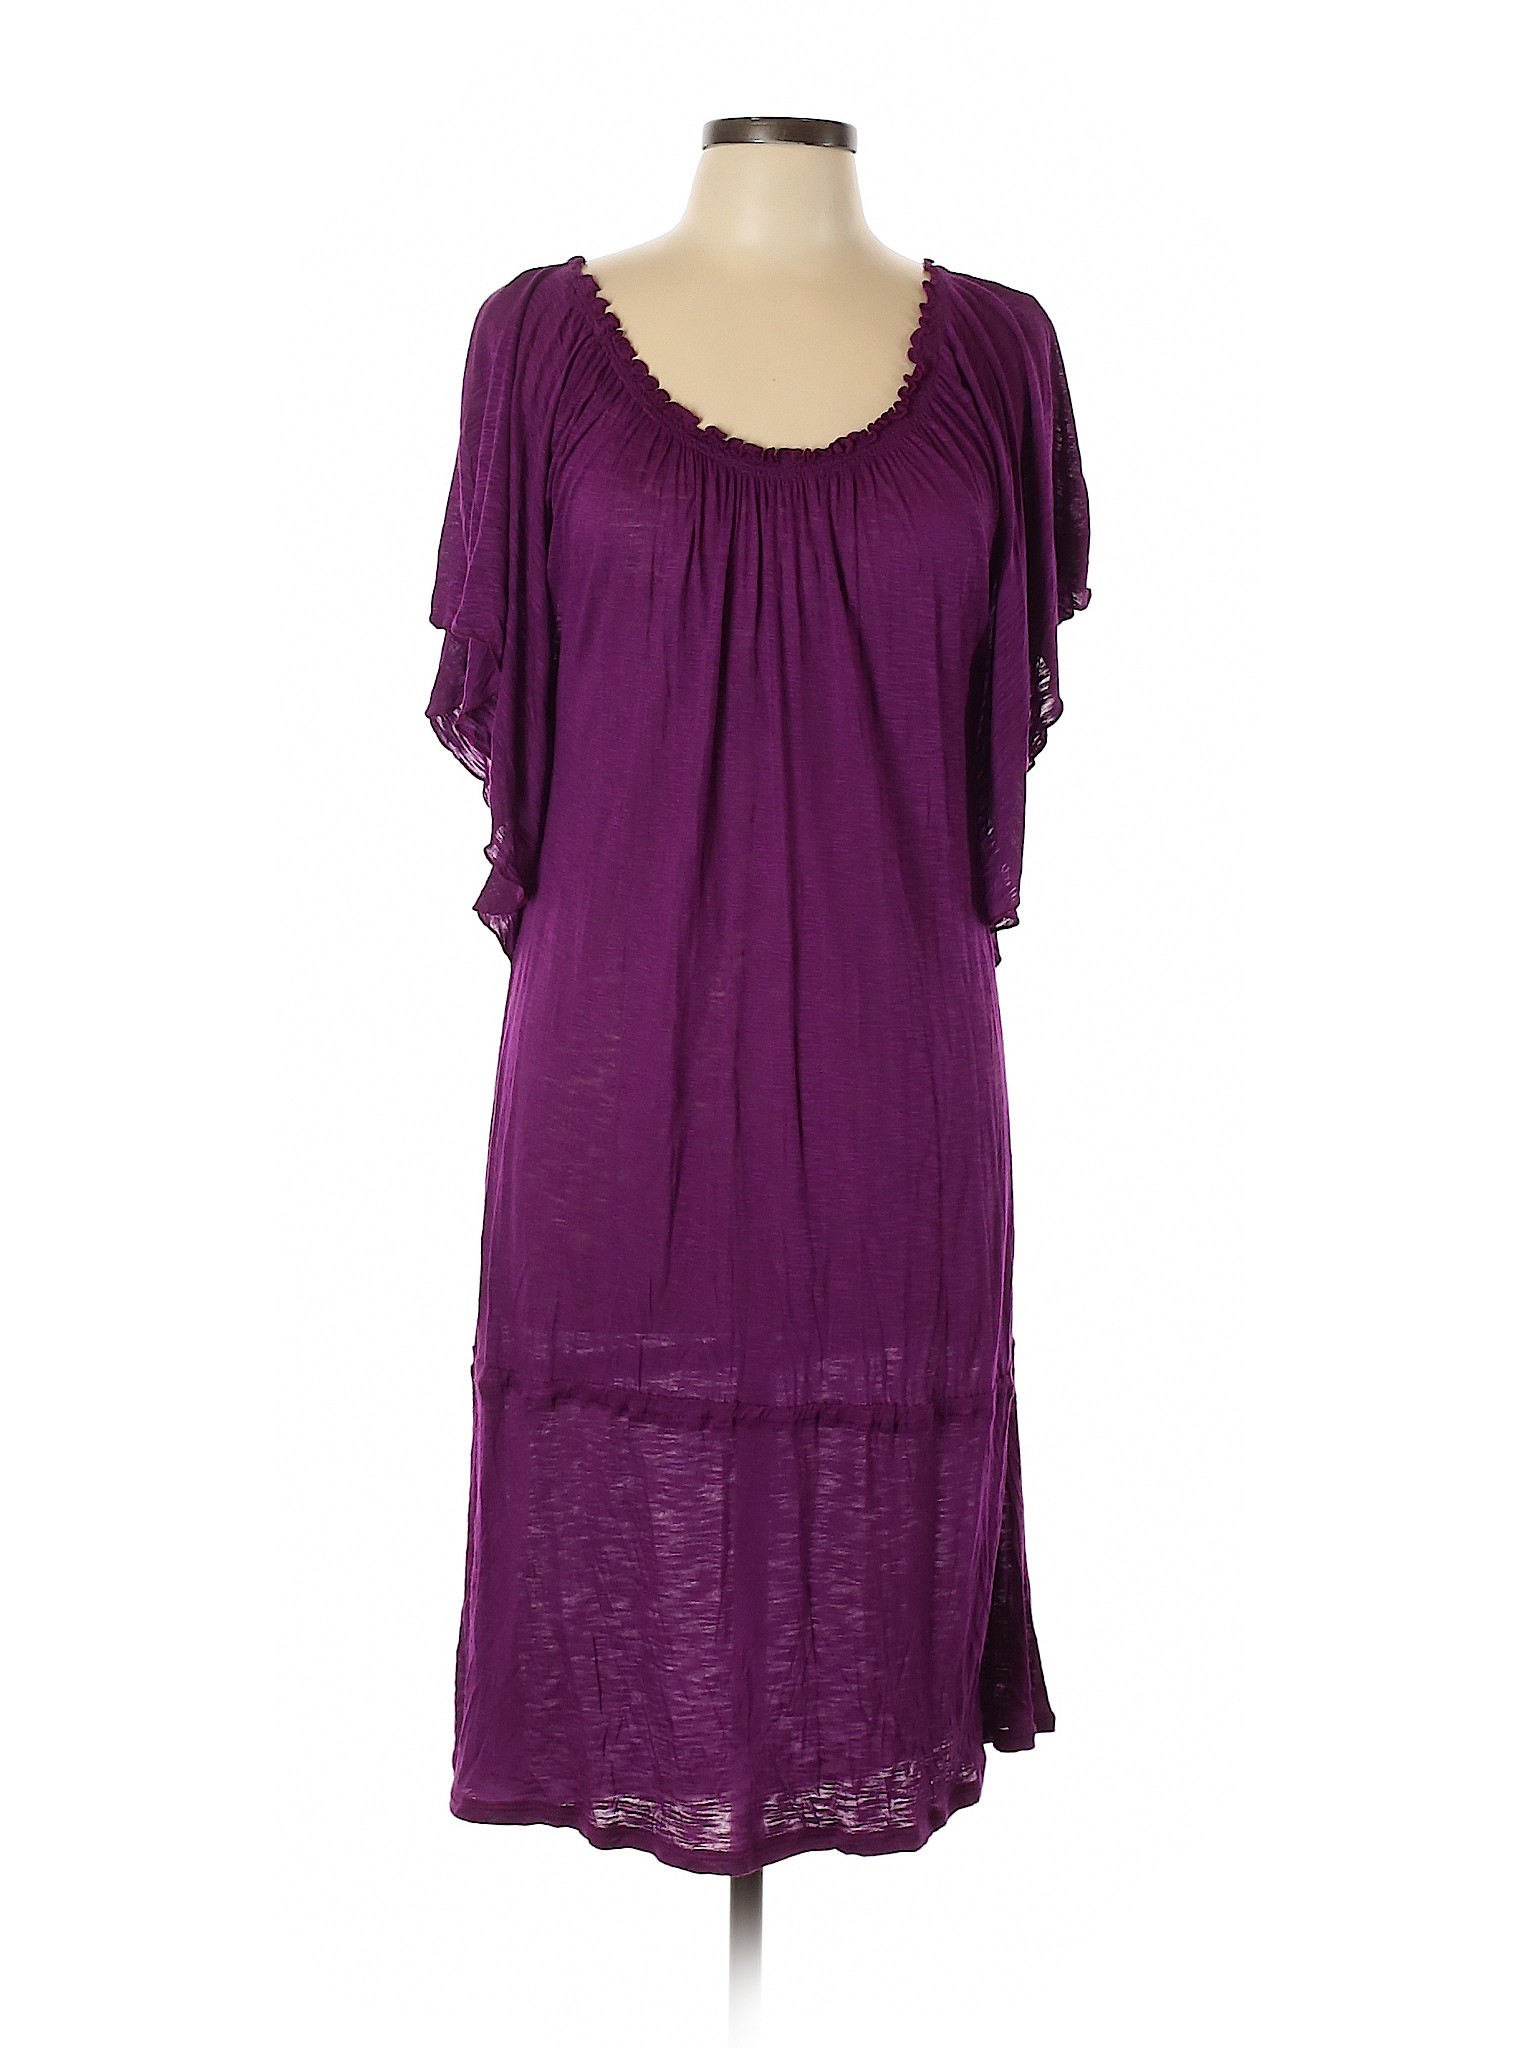 NWT La Blanca Women Purple Casual Dress L | eBay